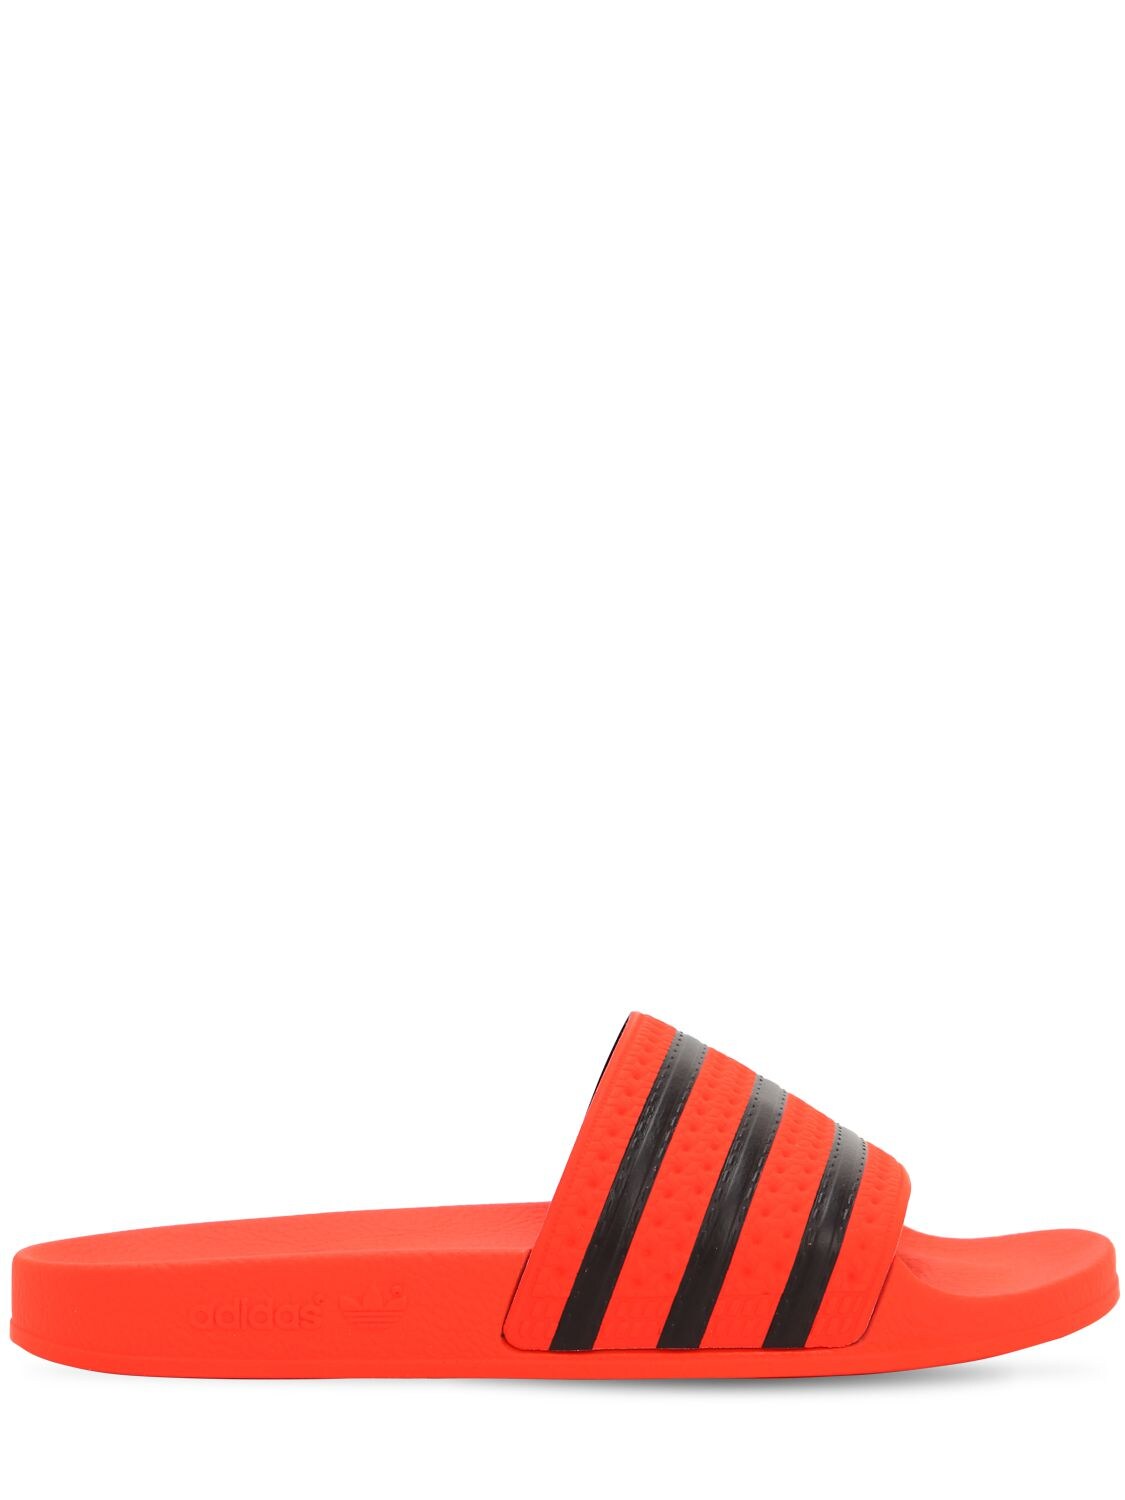 Adidas Originals Adilette Rubber Slide Sandals In Red